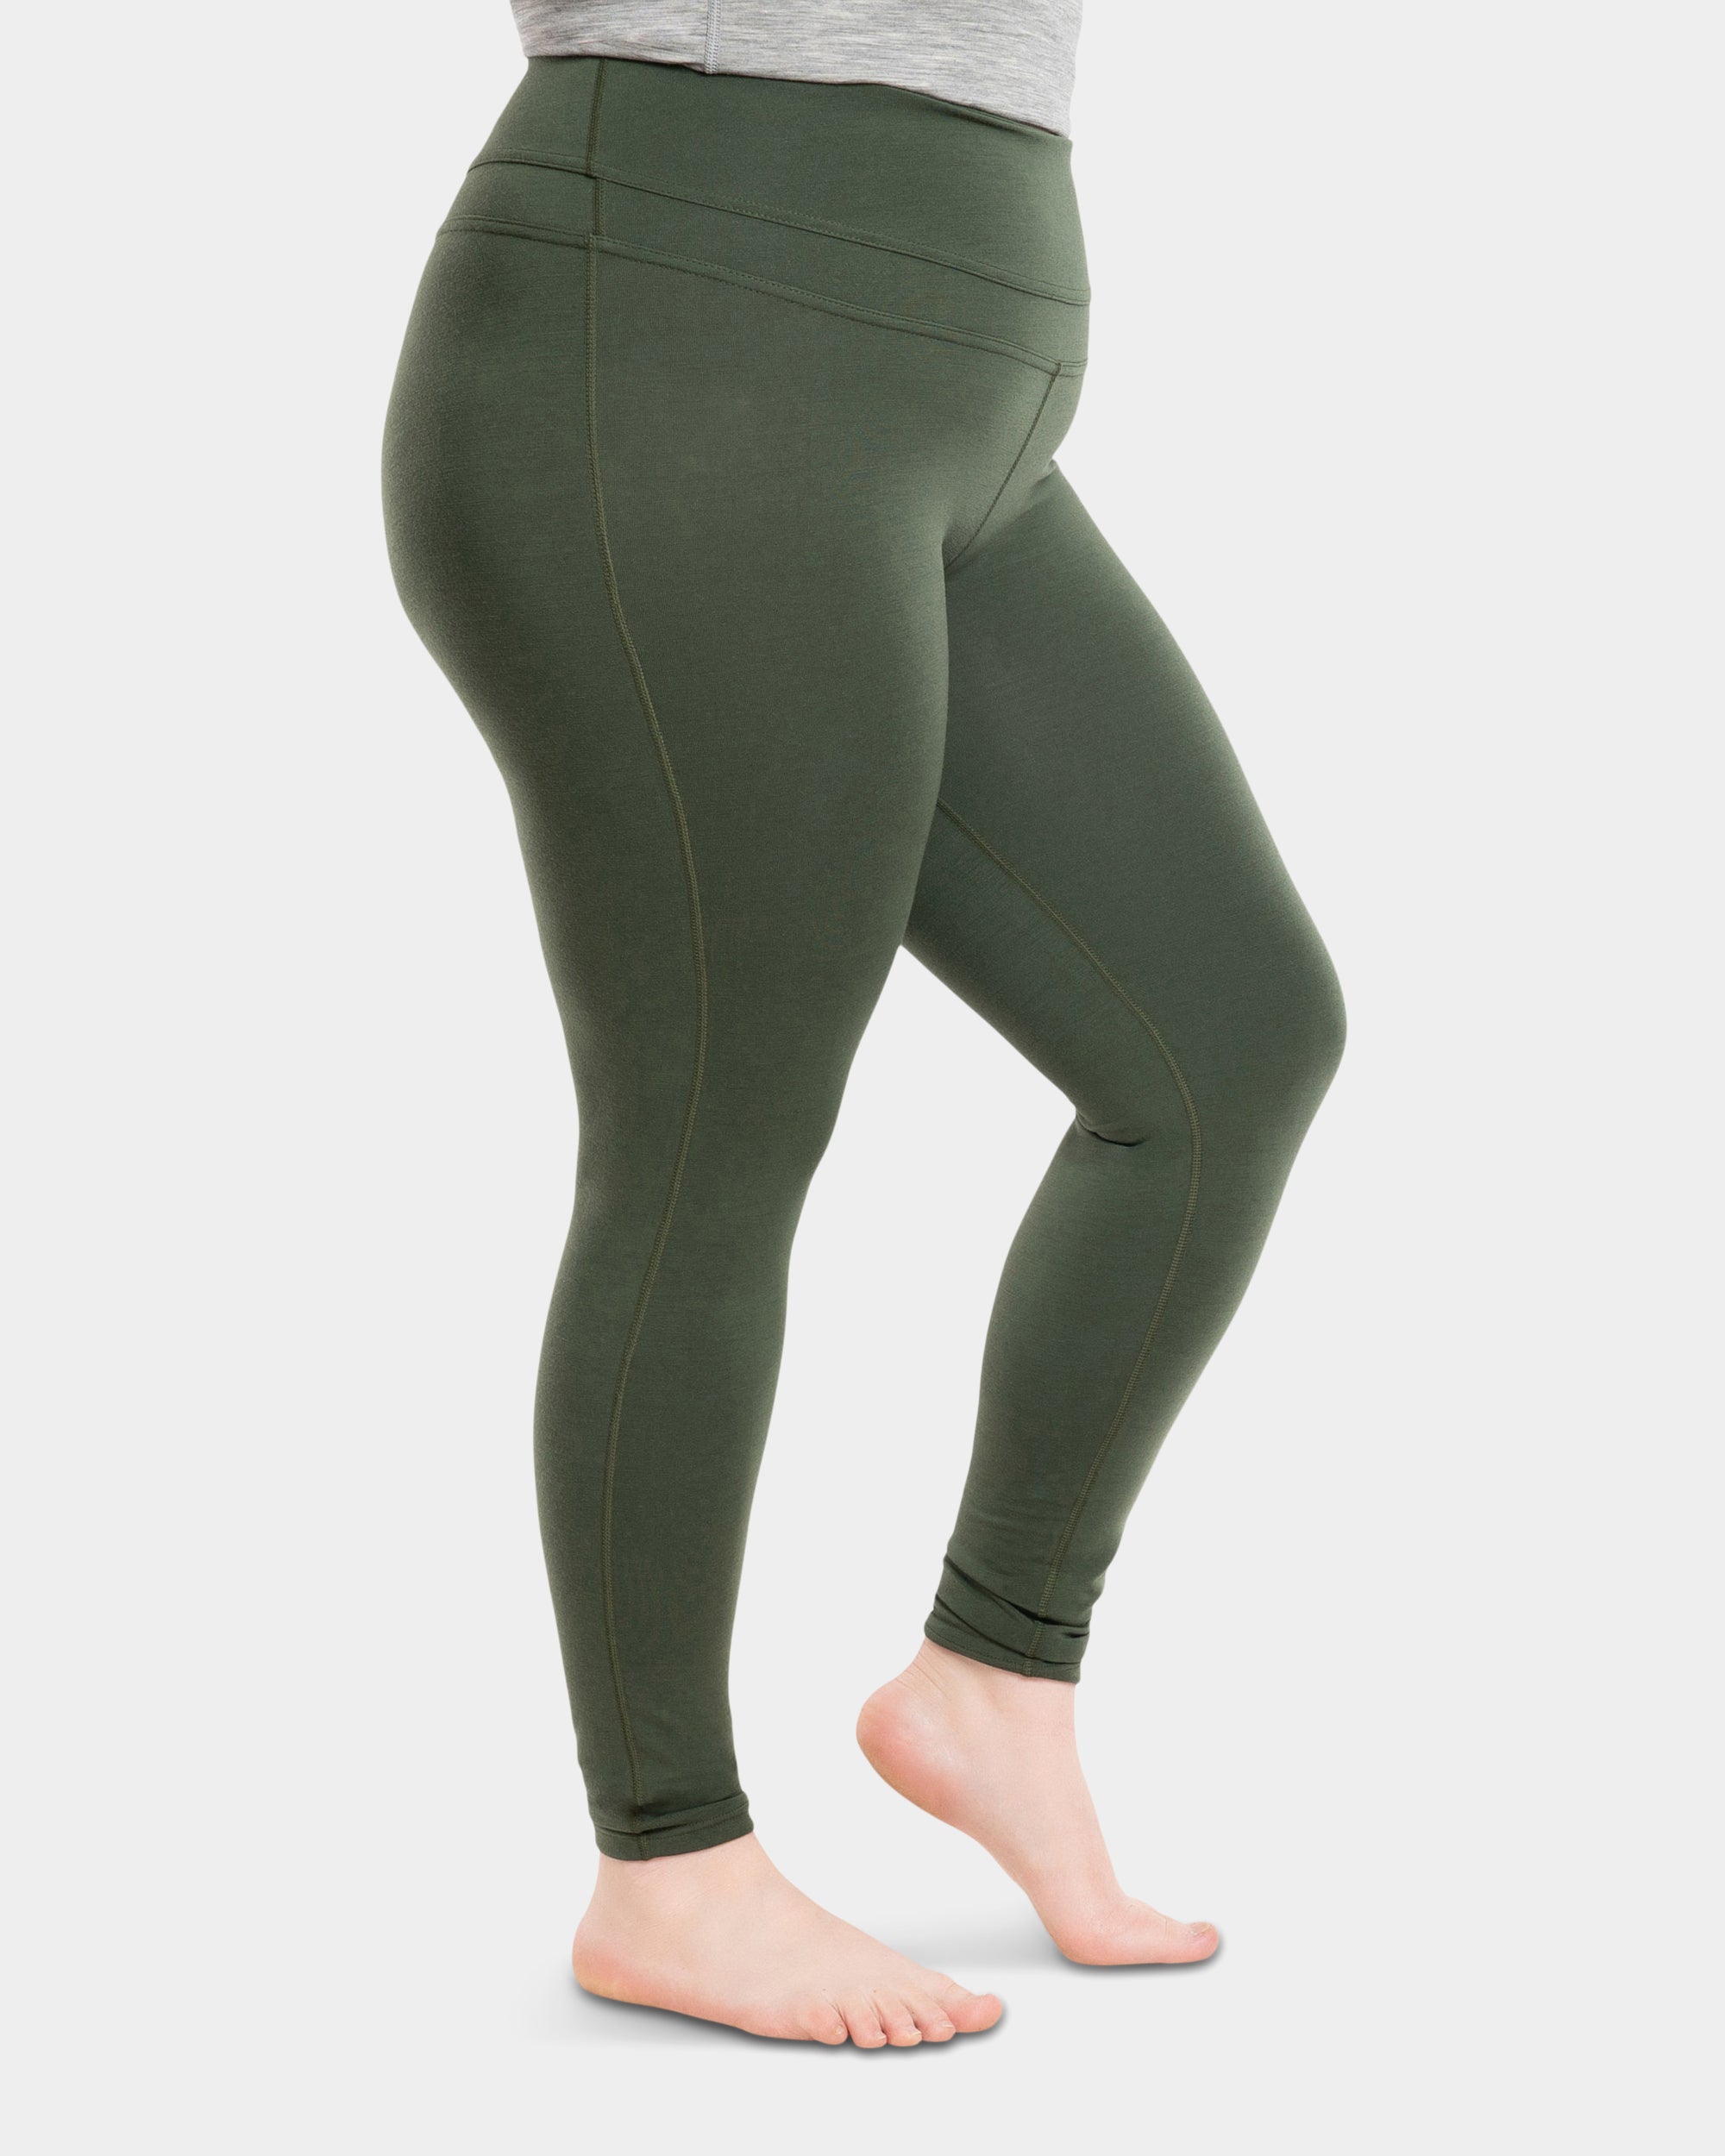 jsaierl Super Thick Cashmere Leggings for Women,Premium Women's Fleece  Lined Legging Wool Warm High Waist Elastic Yoga Slim Pant